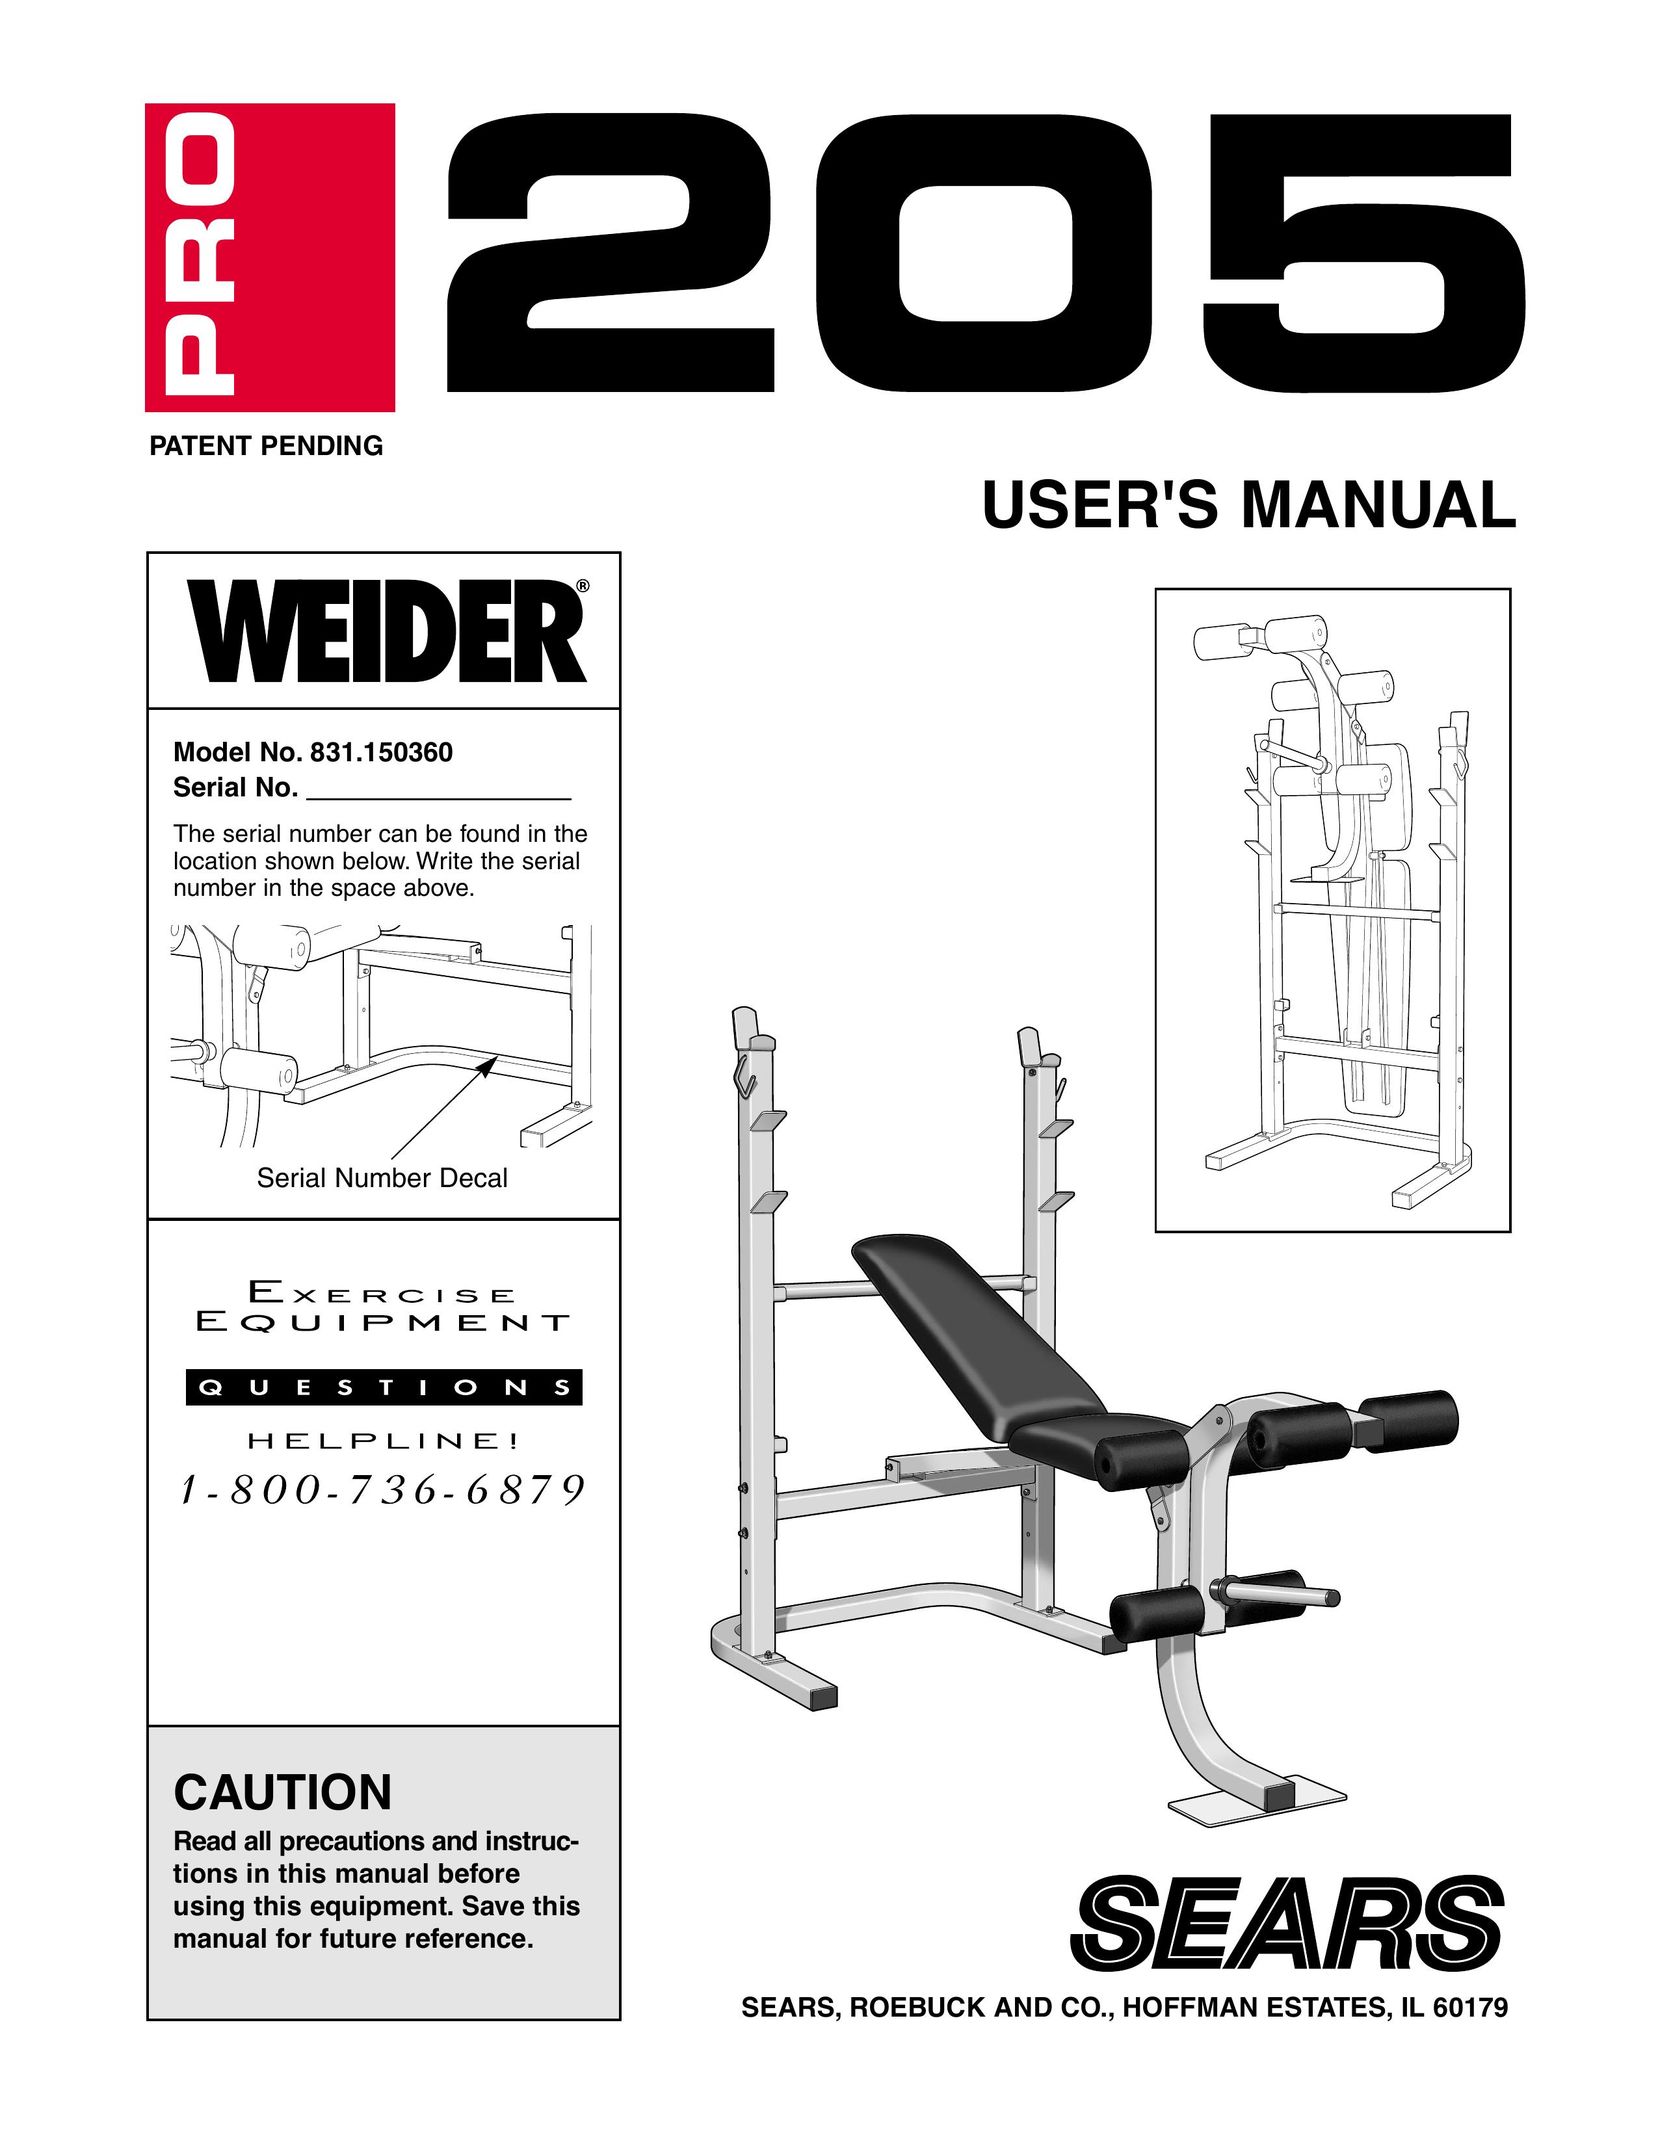 Weider 831.150360 Home Gym User Manual